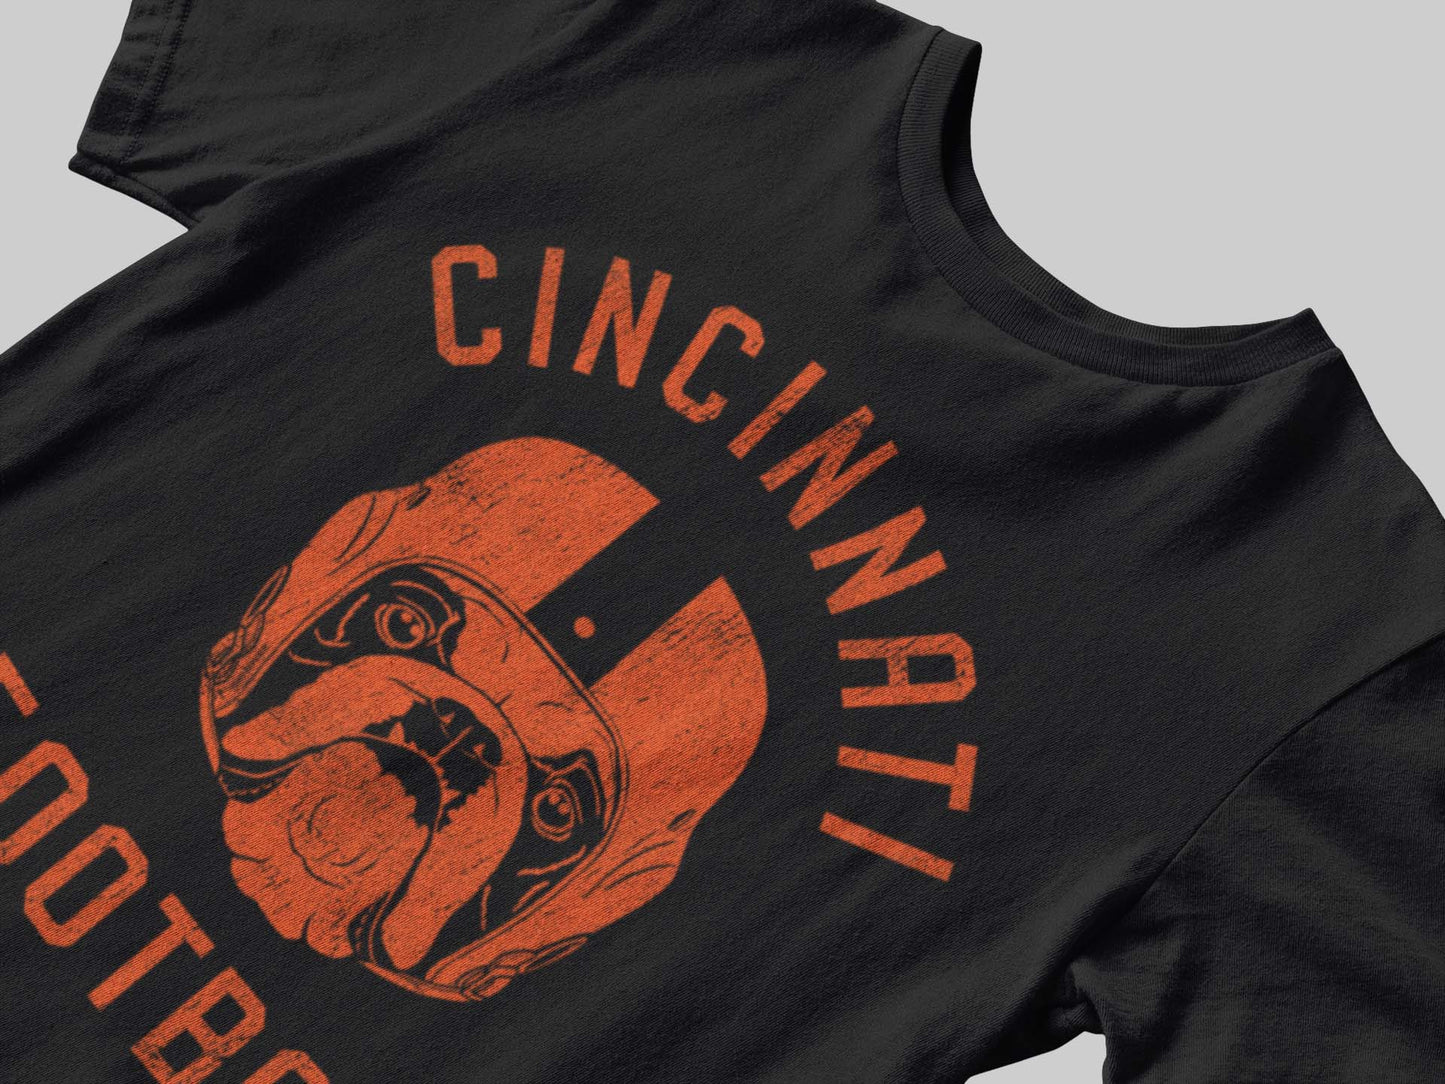 Cincinnati Football English Bulldog T-Shirt